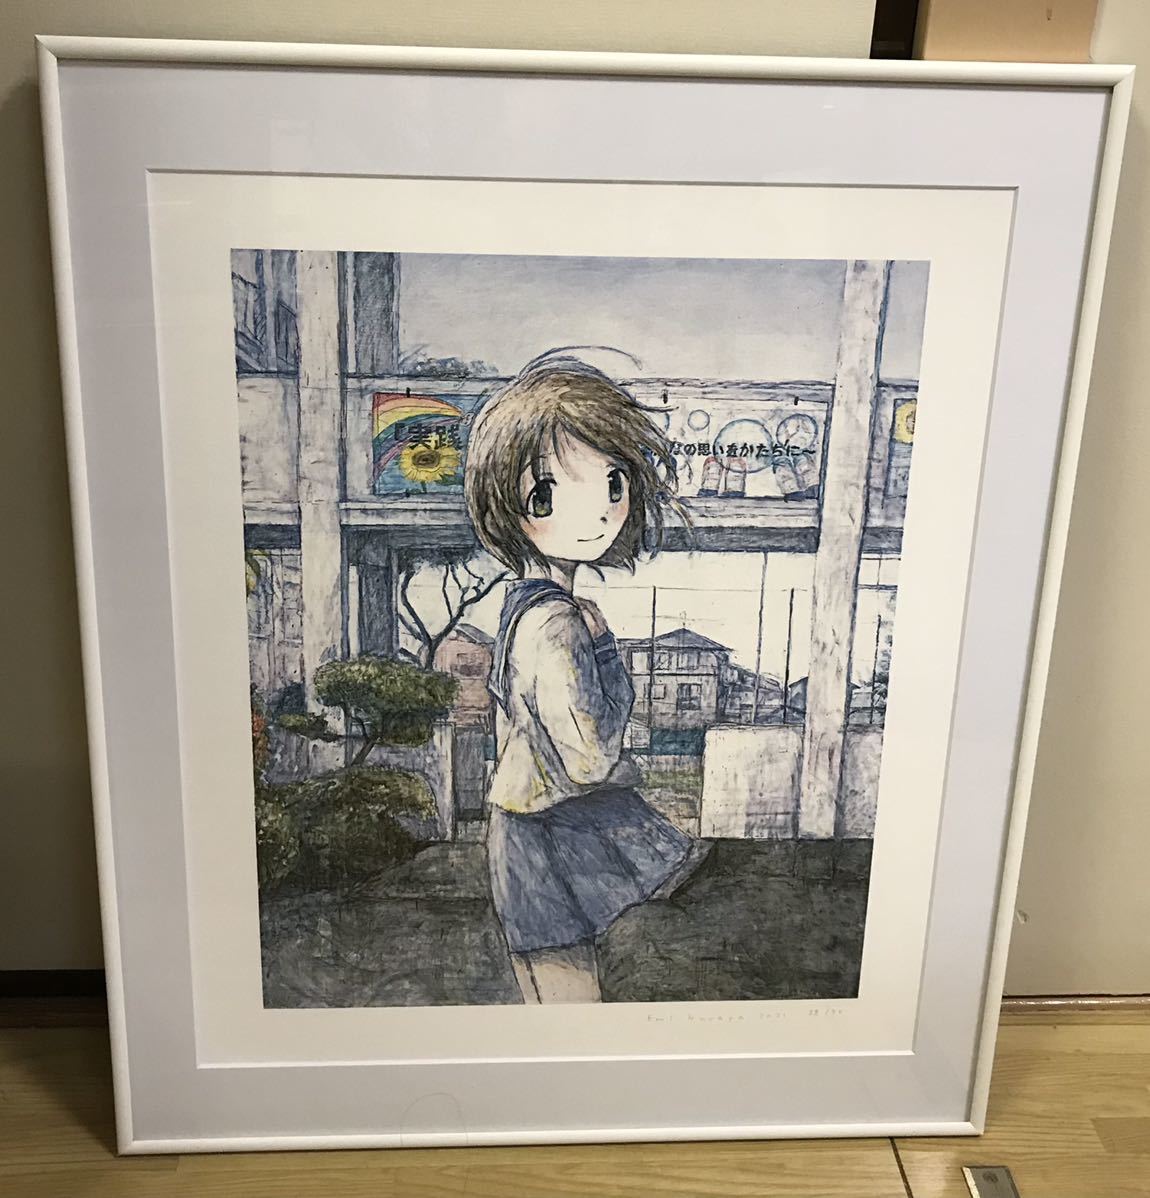  frame settled ..... hope. she 50 sheets limitation autographed woodcut ka squid ikiki inspection ) Murakami .kaikaikiki becomes. Gin Garo poster 